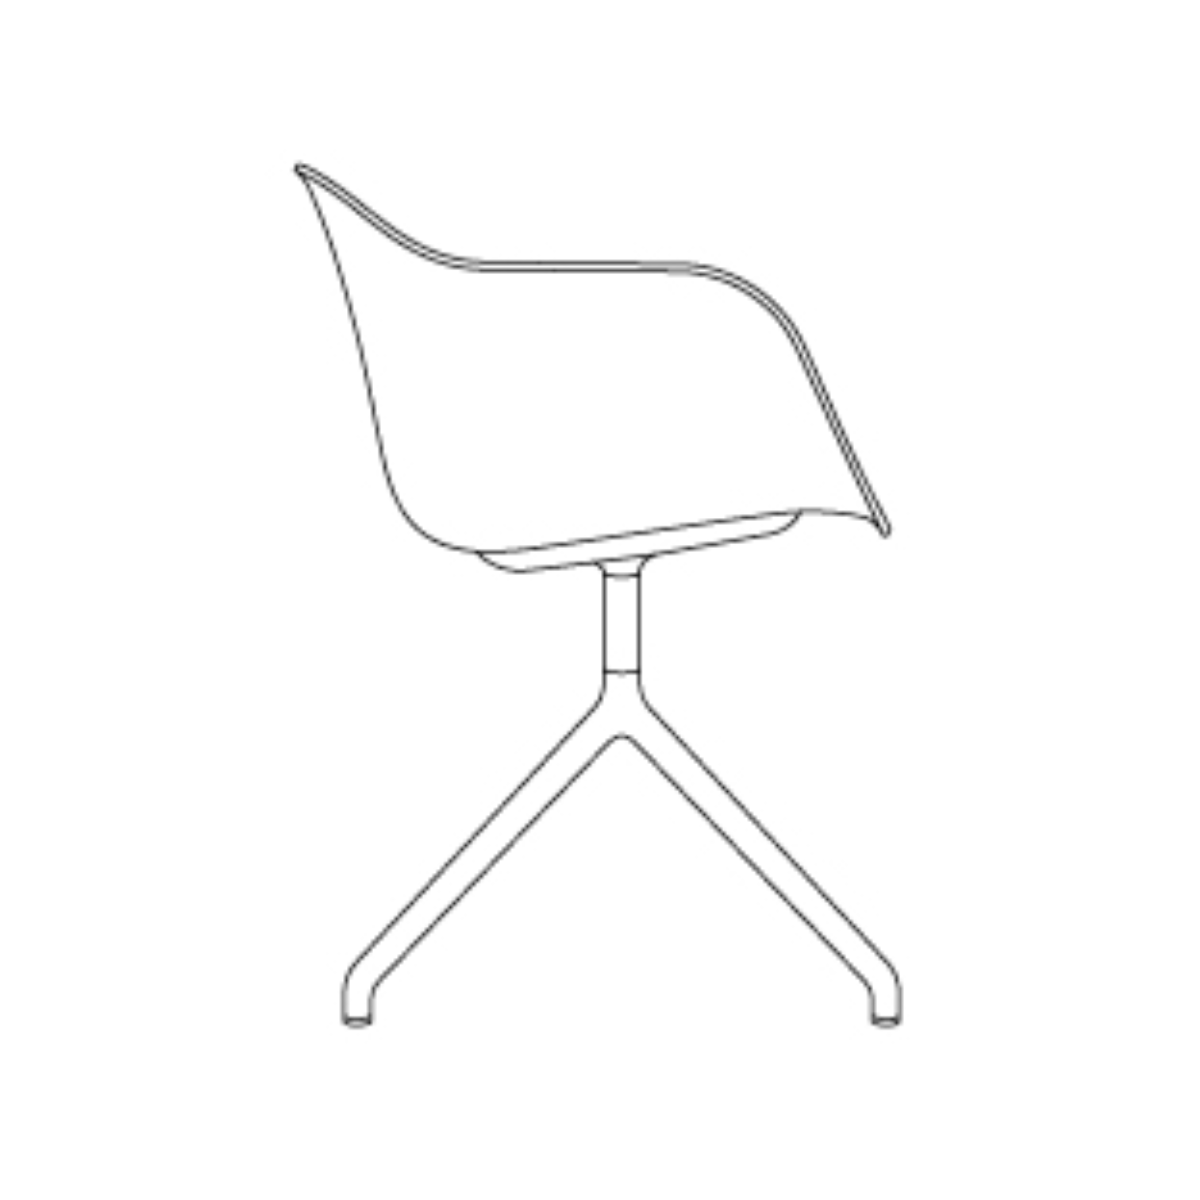 unupholstered - Fiber chair with armrests swivel base